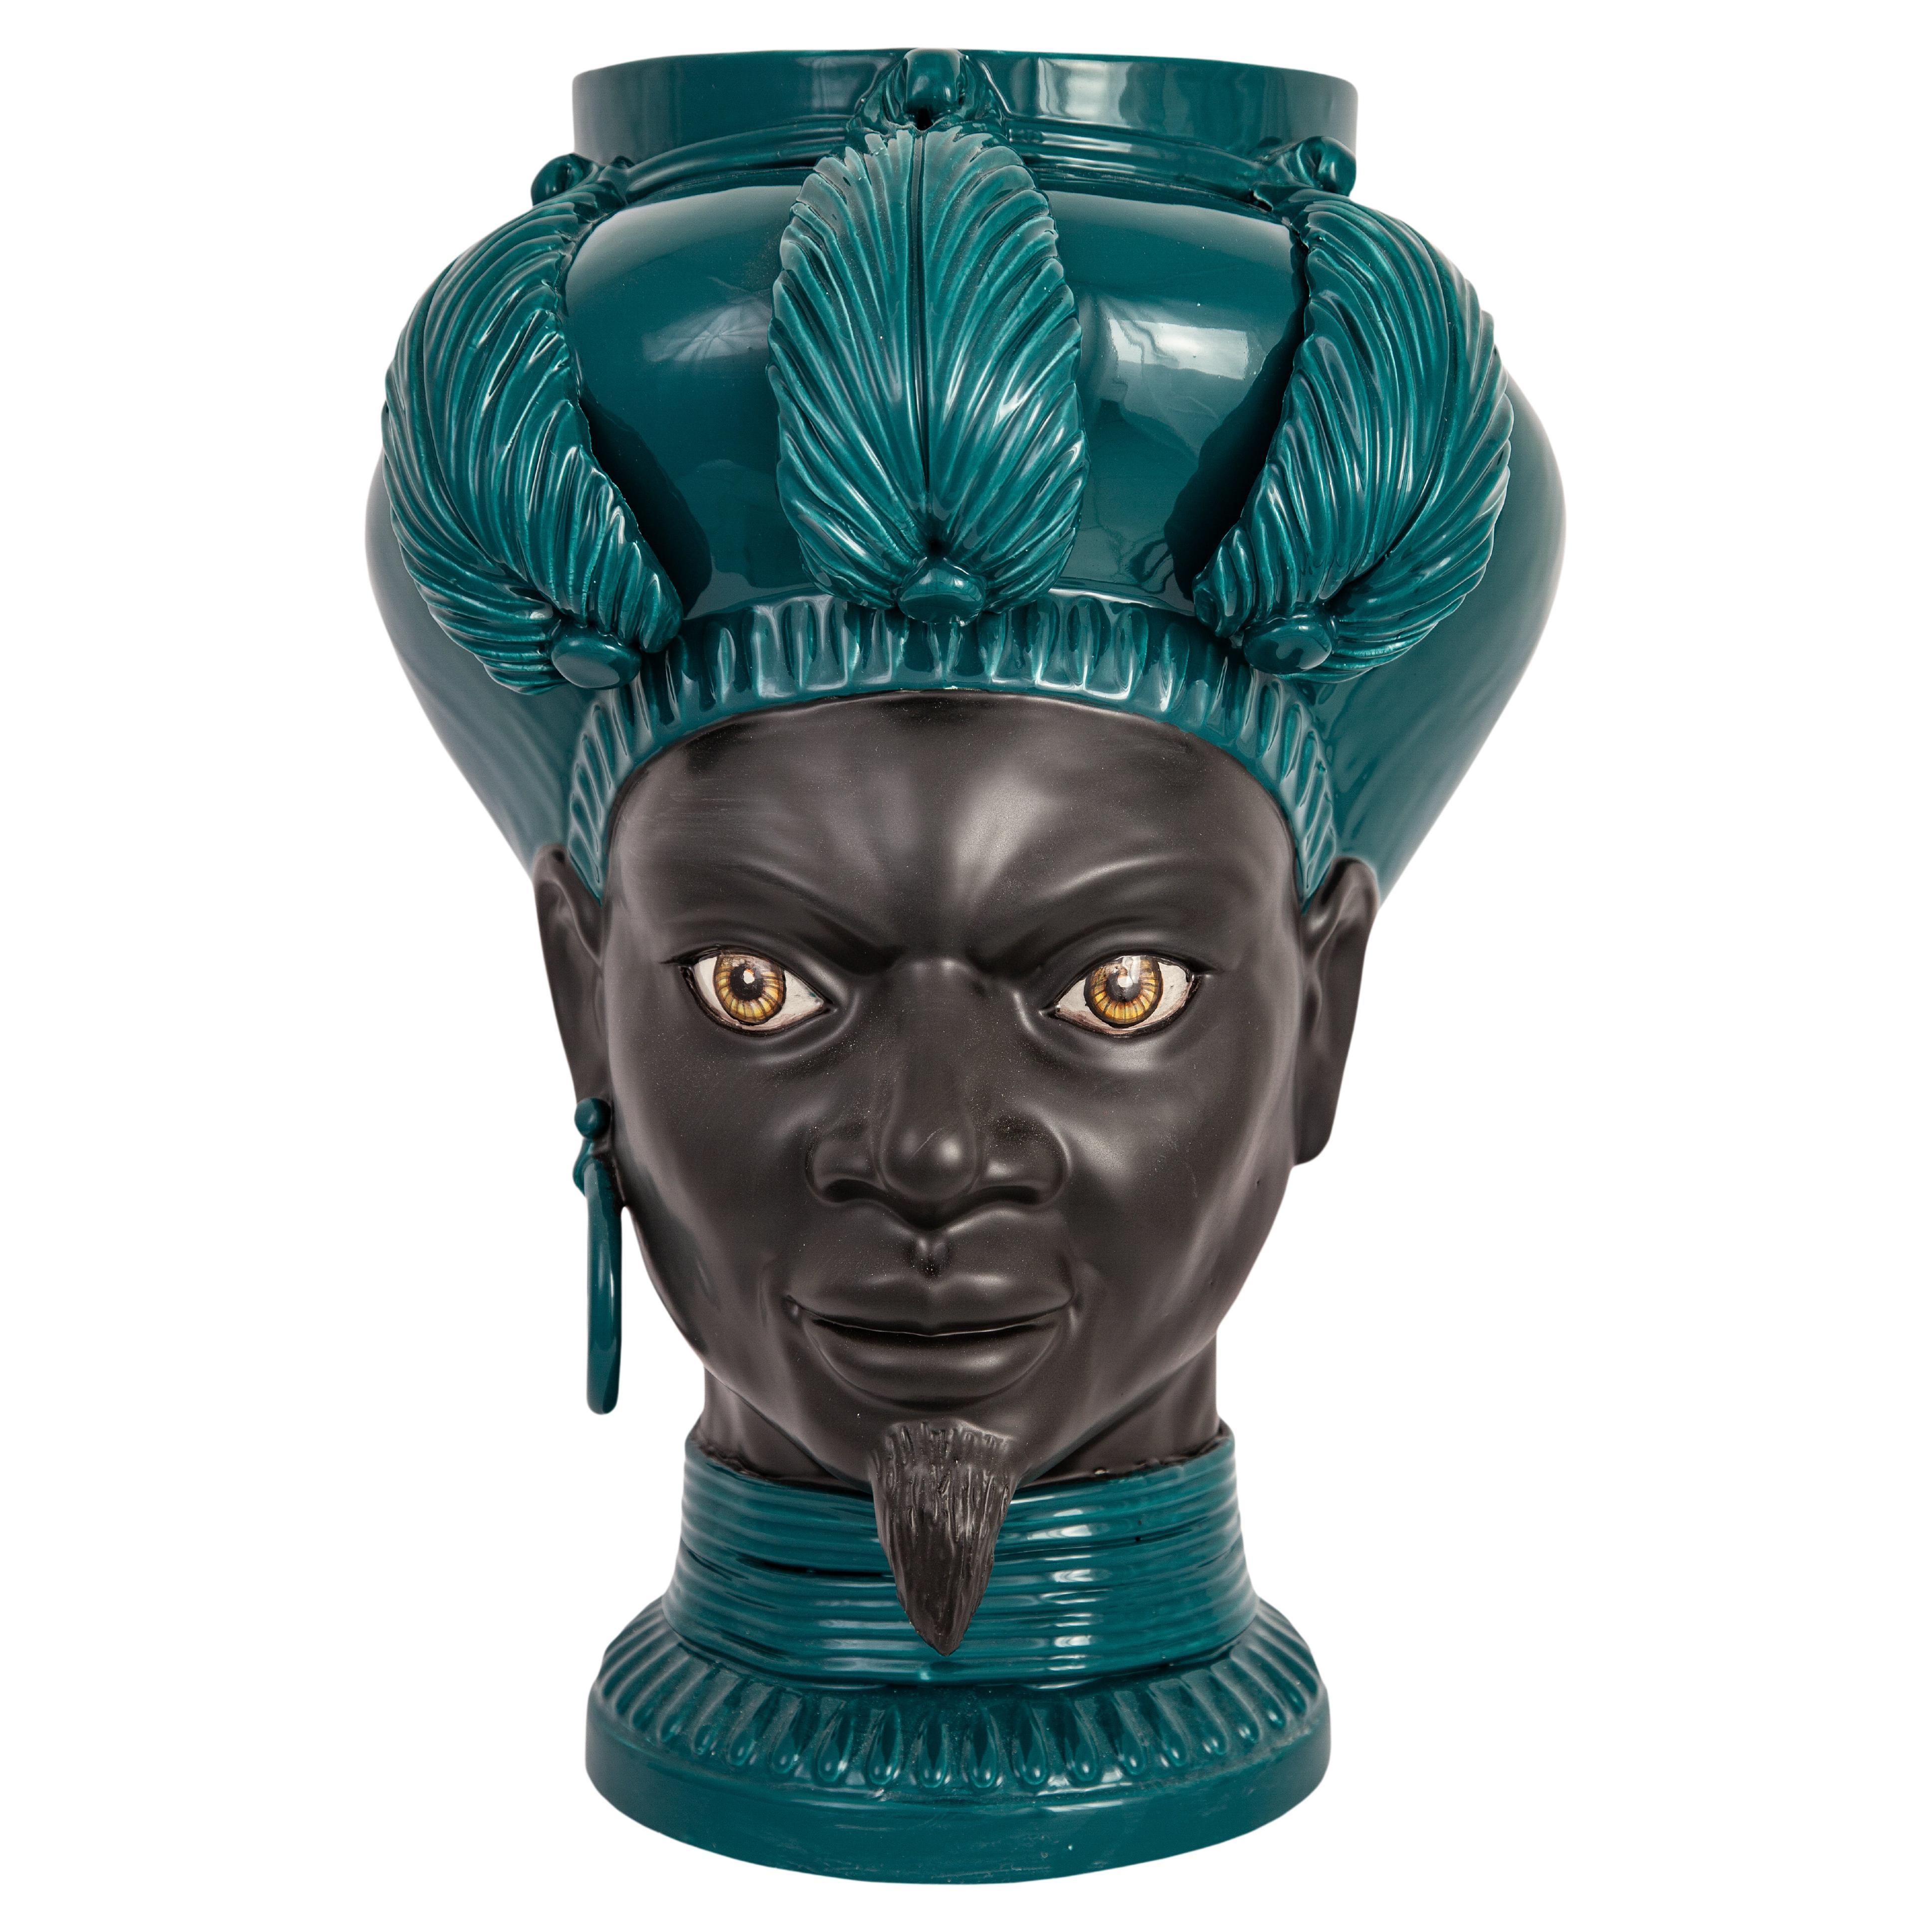 ISIDE I17, Man's Moorish Head, Handmade in Sicily, 2021, Colorful, Size L